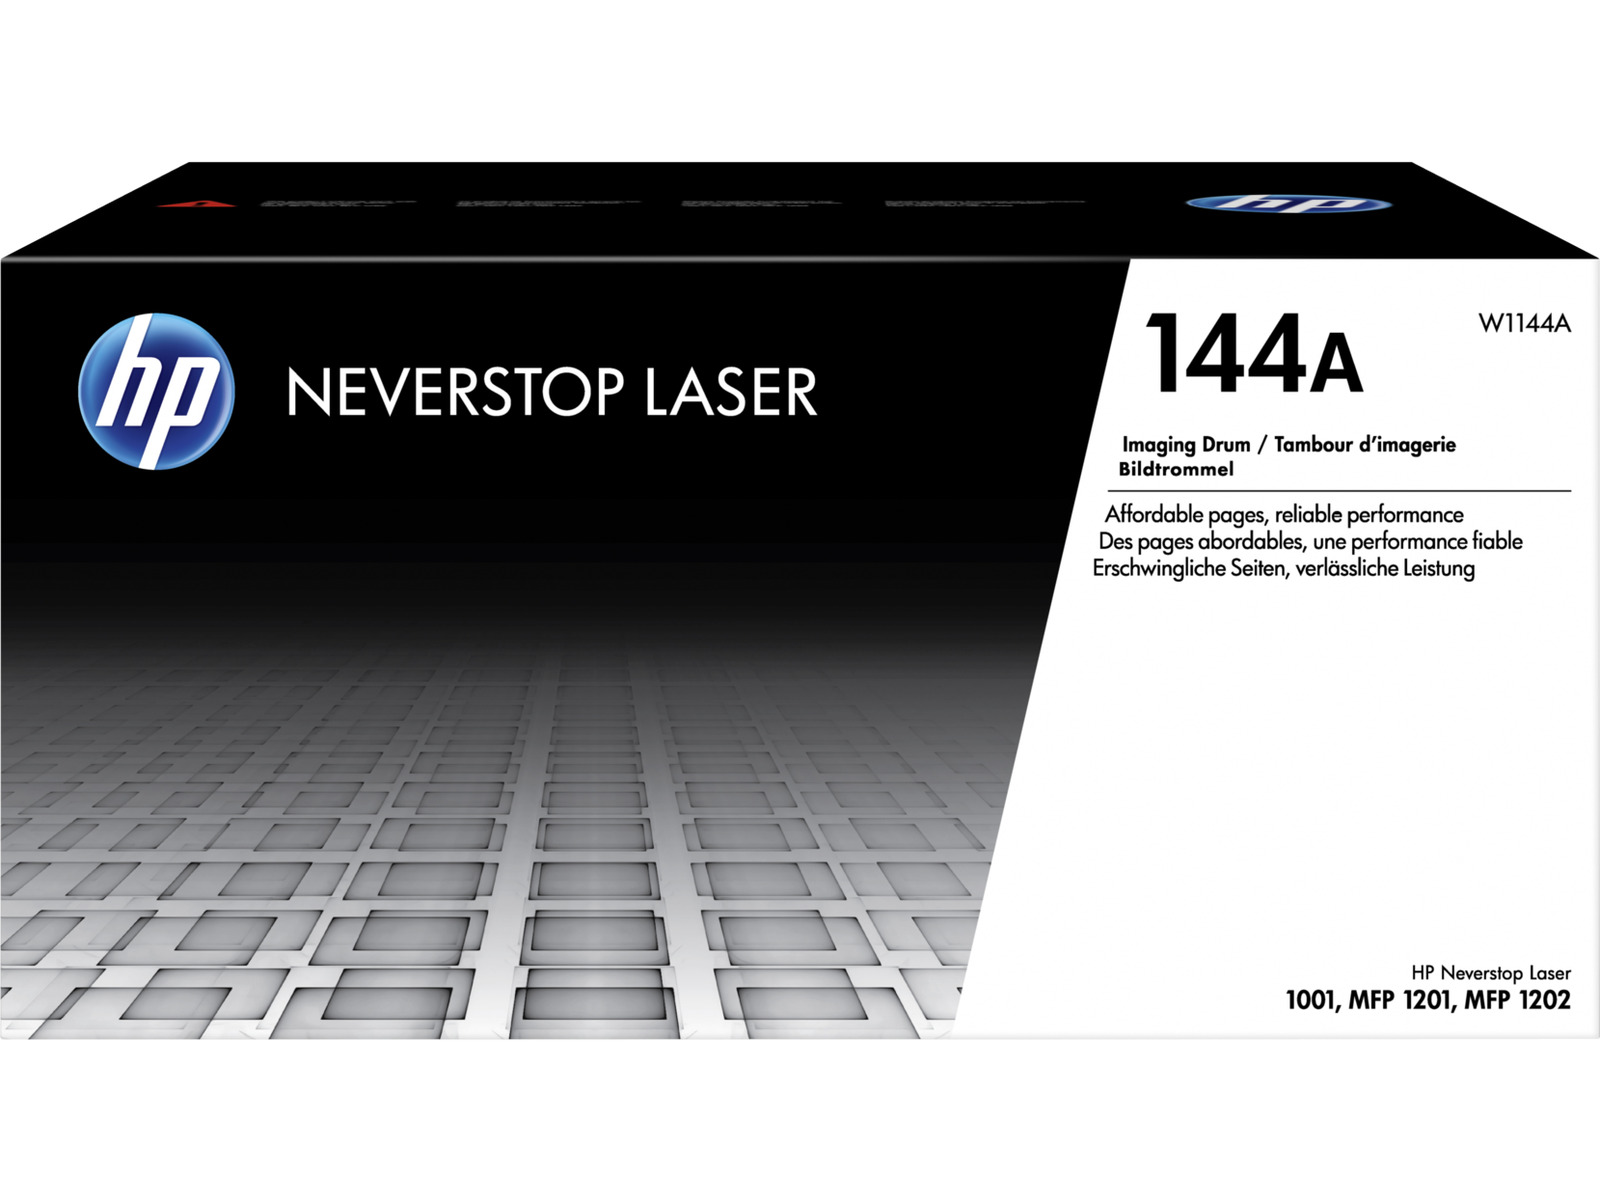 HP 144A Black Original Laser Imaging Drum, ~20,000 pages, W1144A